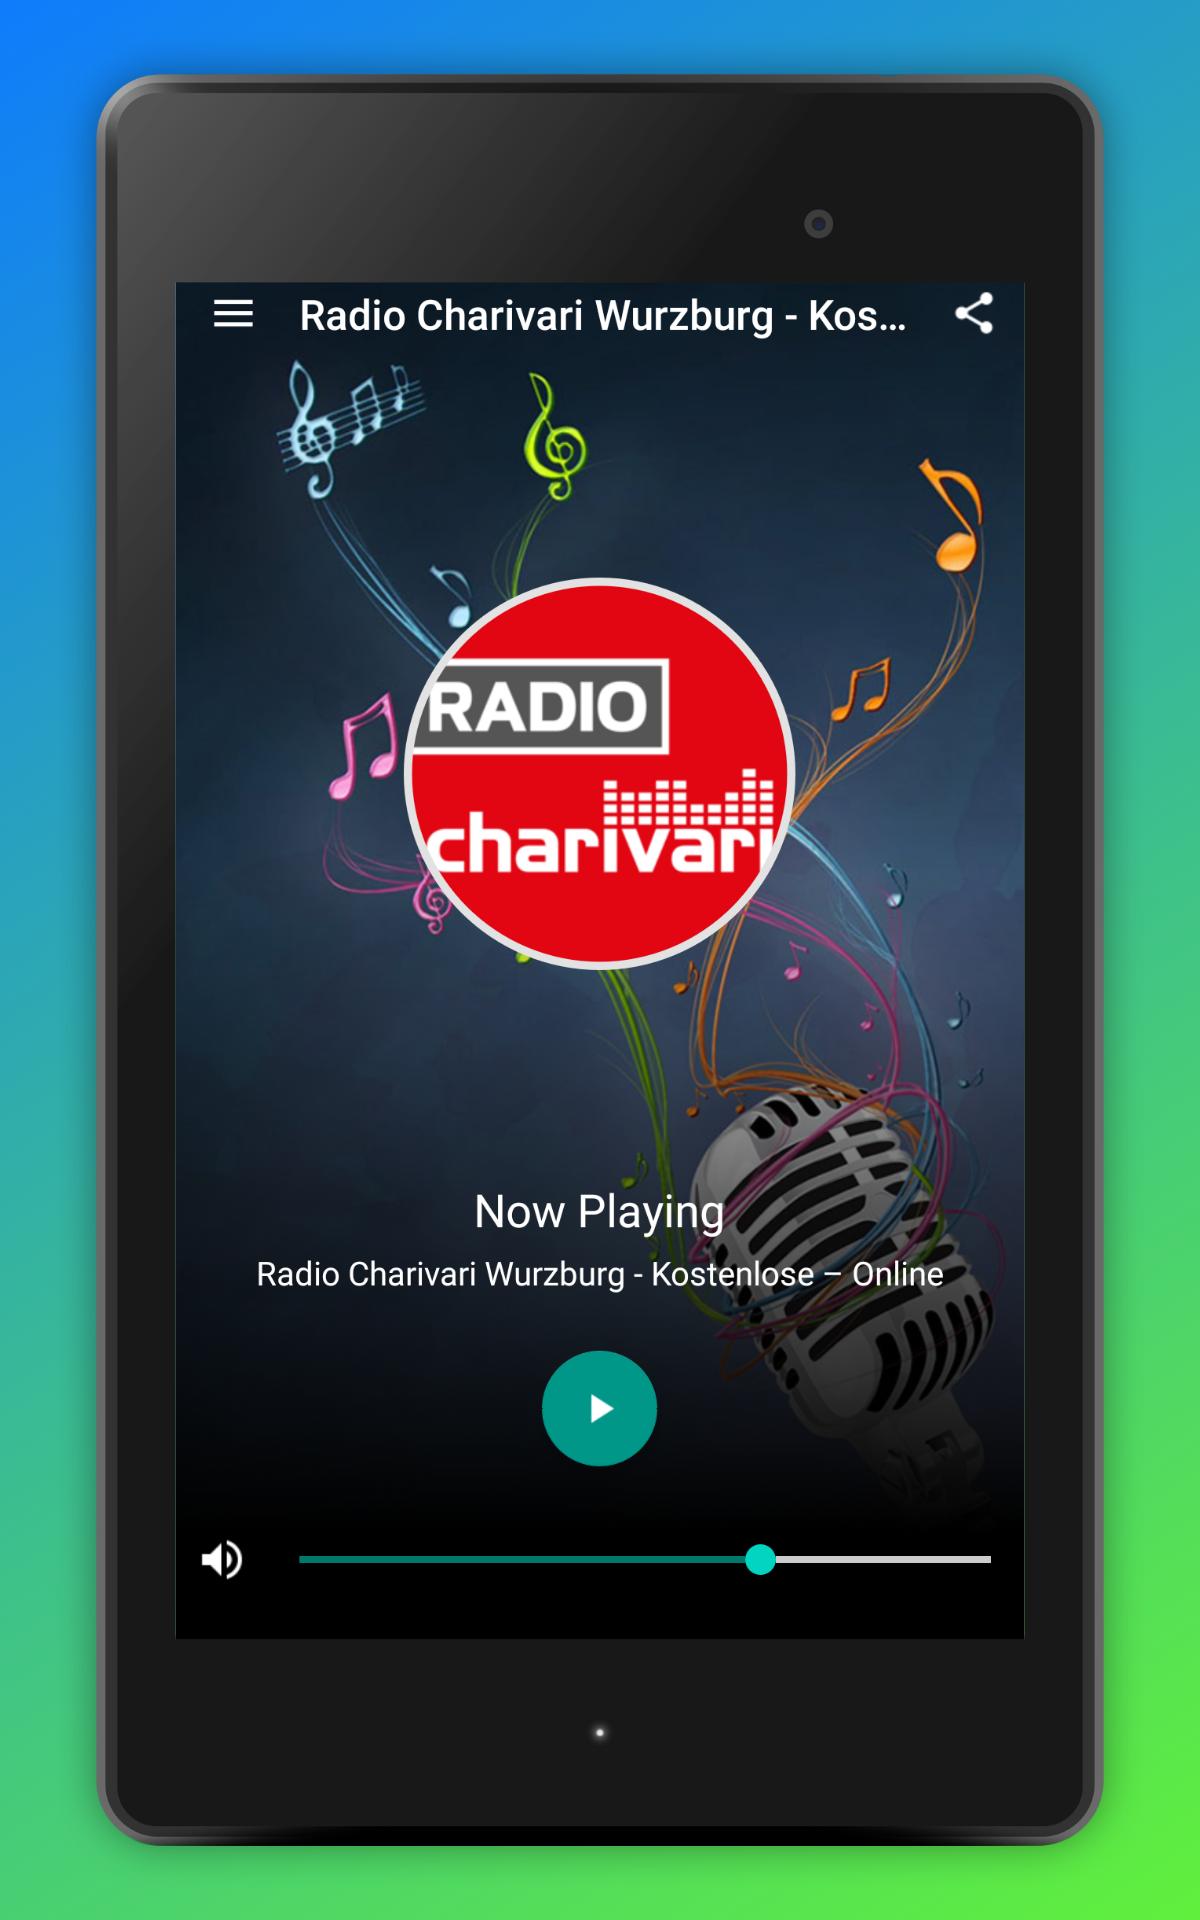 Radio Charivari Wurzburg - Kostenlose – Online for Android - APK Download